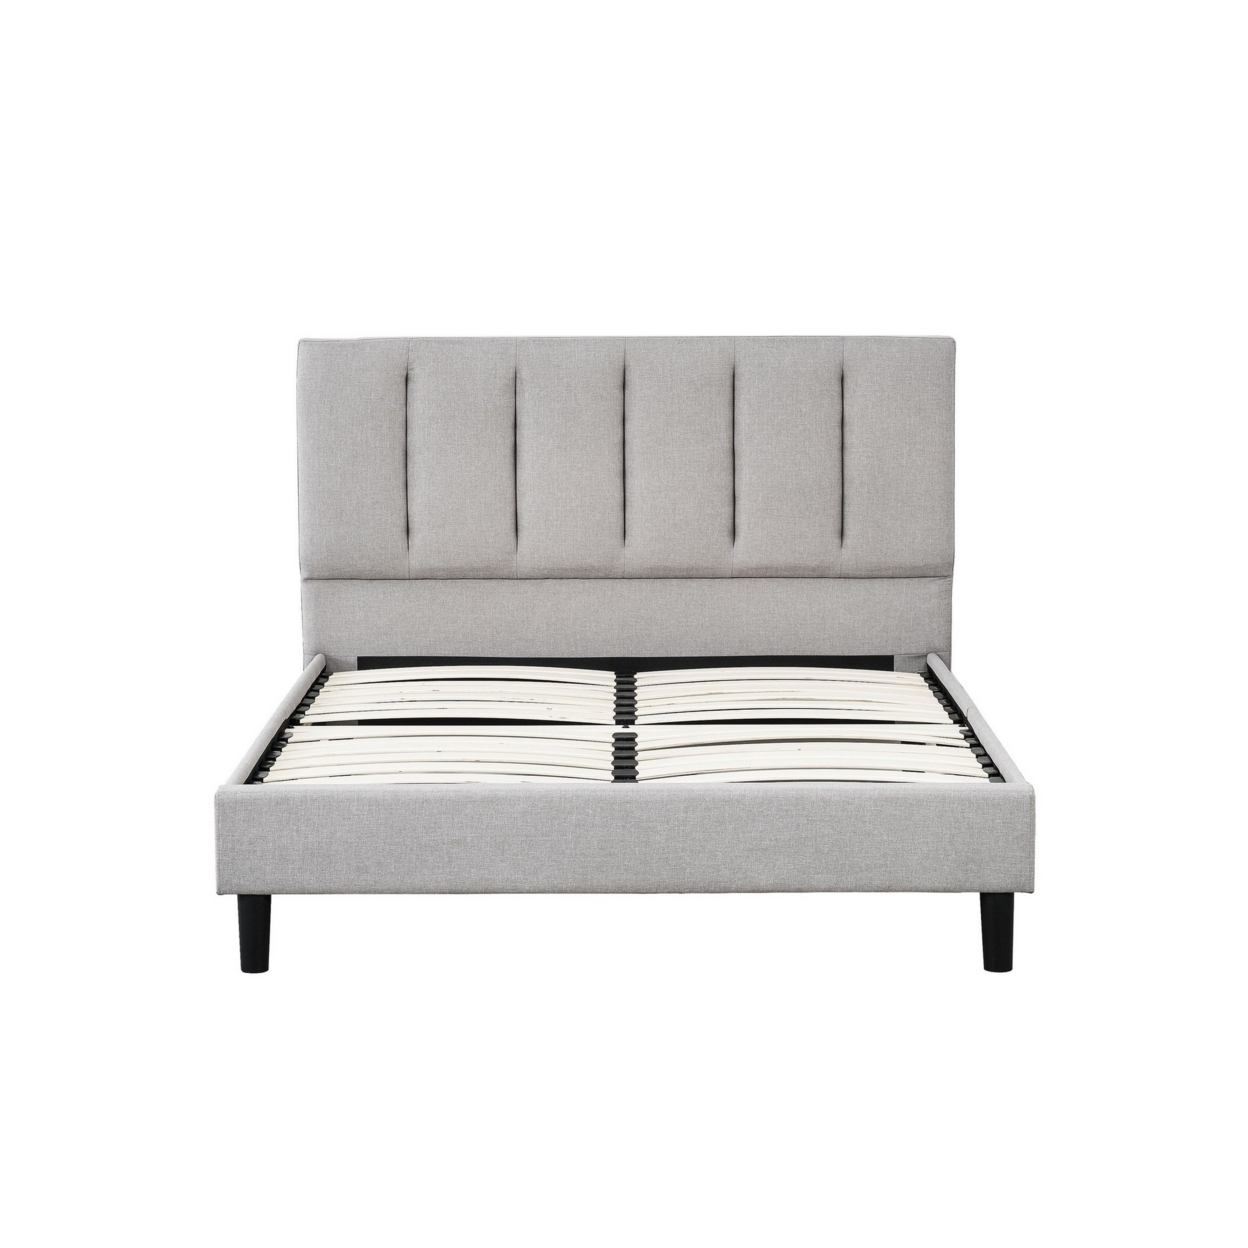 Heli Queen Bed, Gray Linen Upholstered Frame, Vertical Tufted Headboard- Saltoro Sherpi